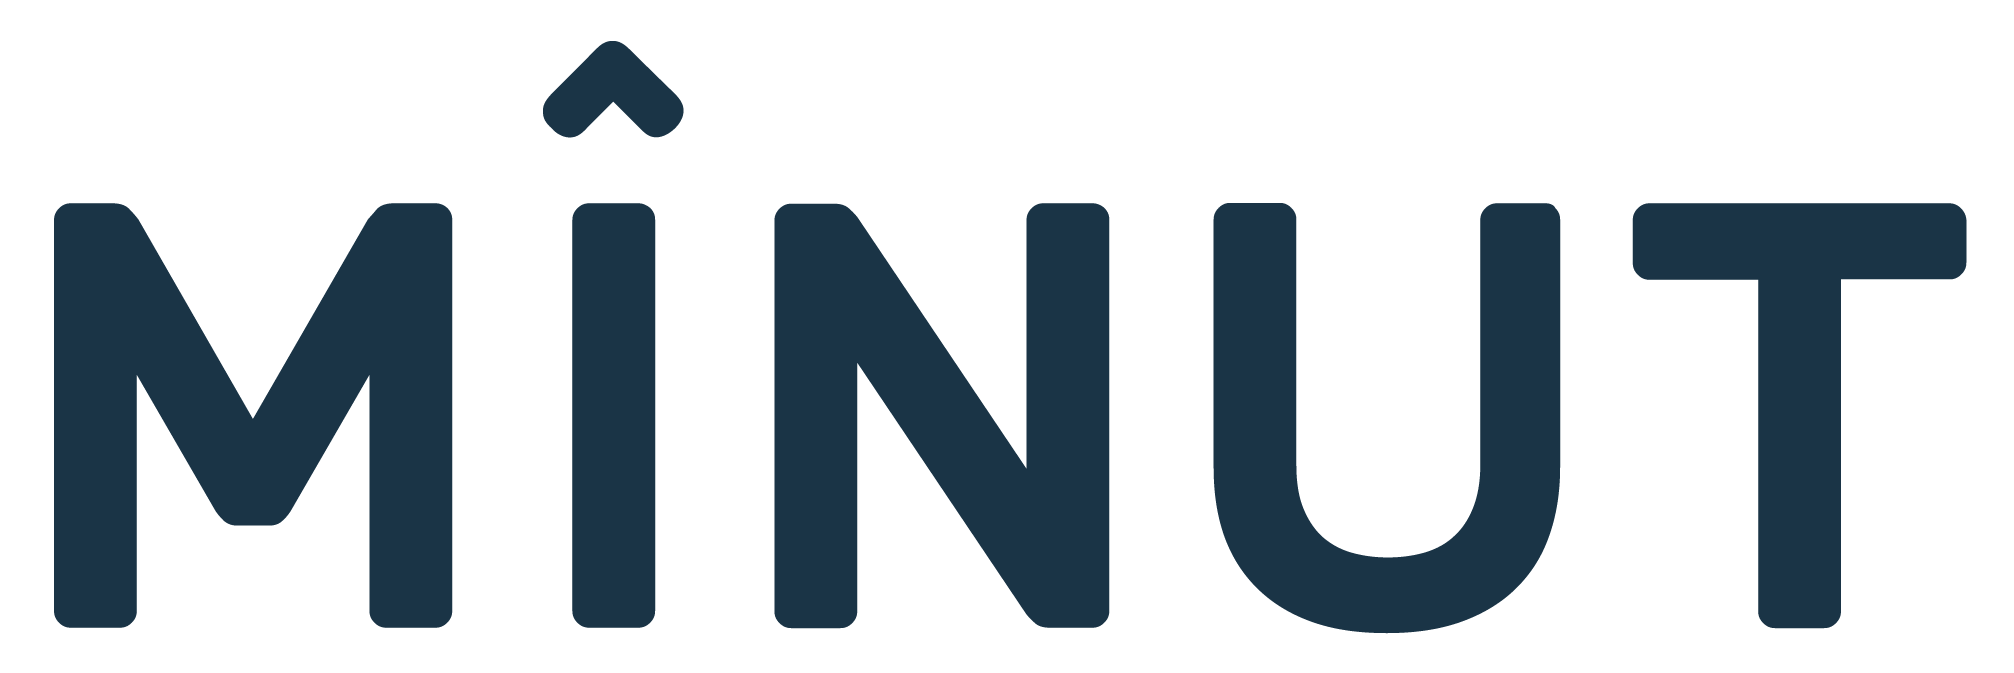 Minut logo